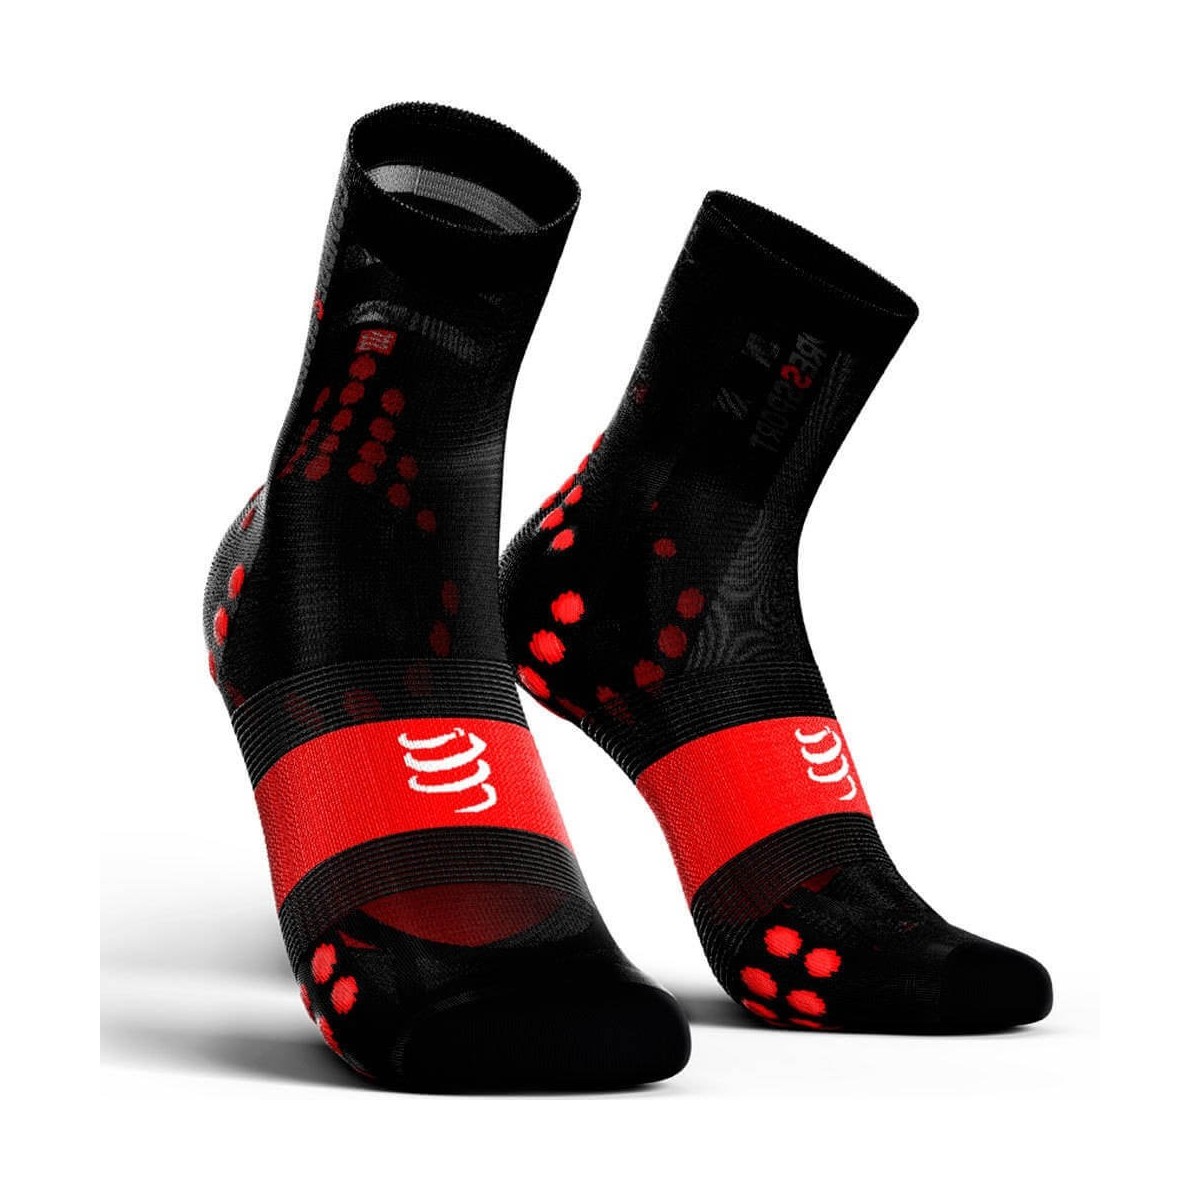 ProRacing V3 Ultra Light Bike Compressport Socks Black Red, Size Size 2